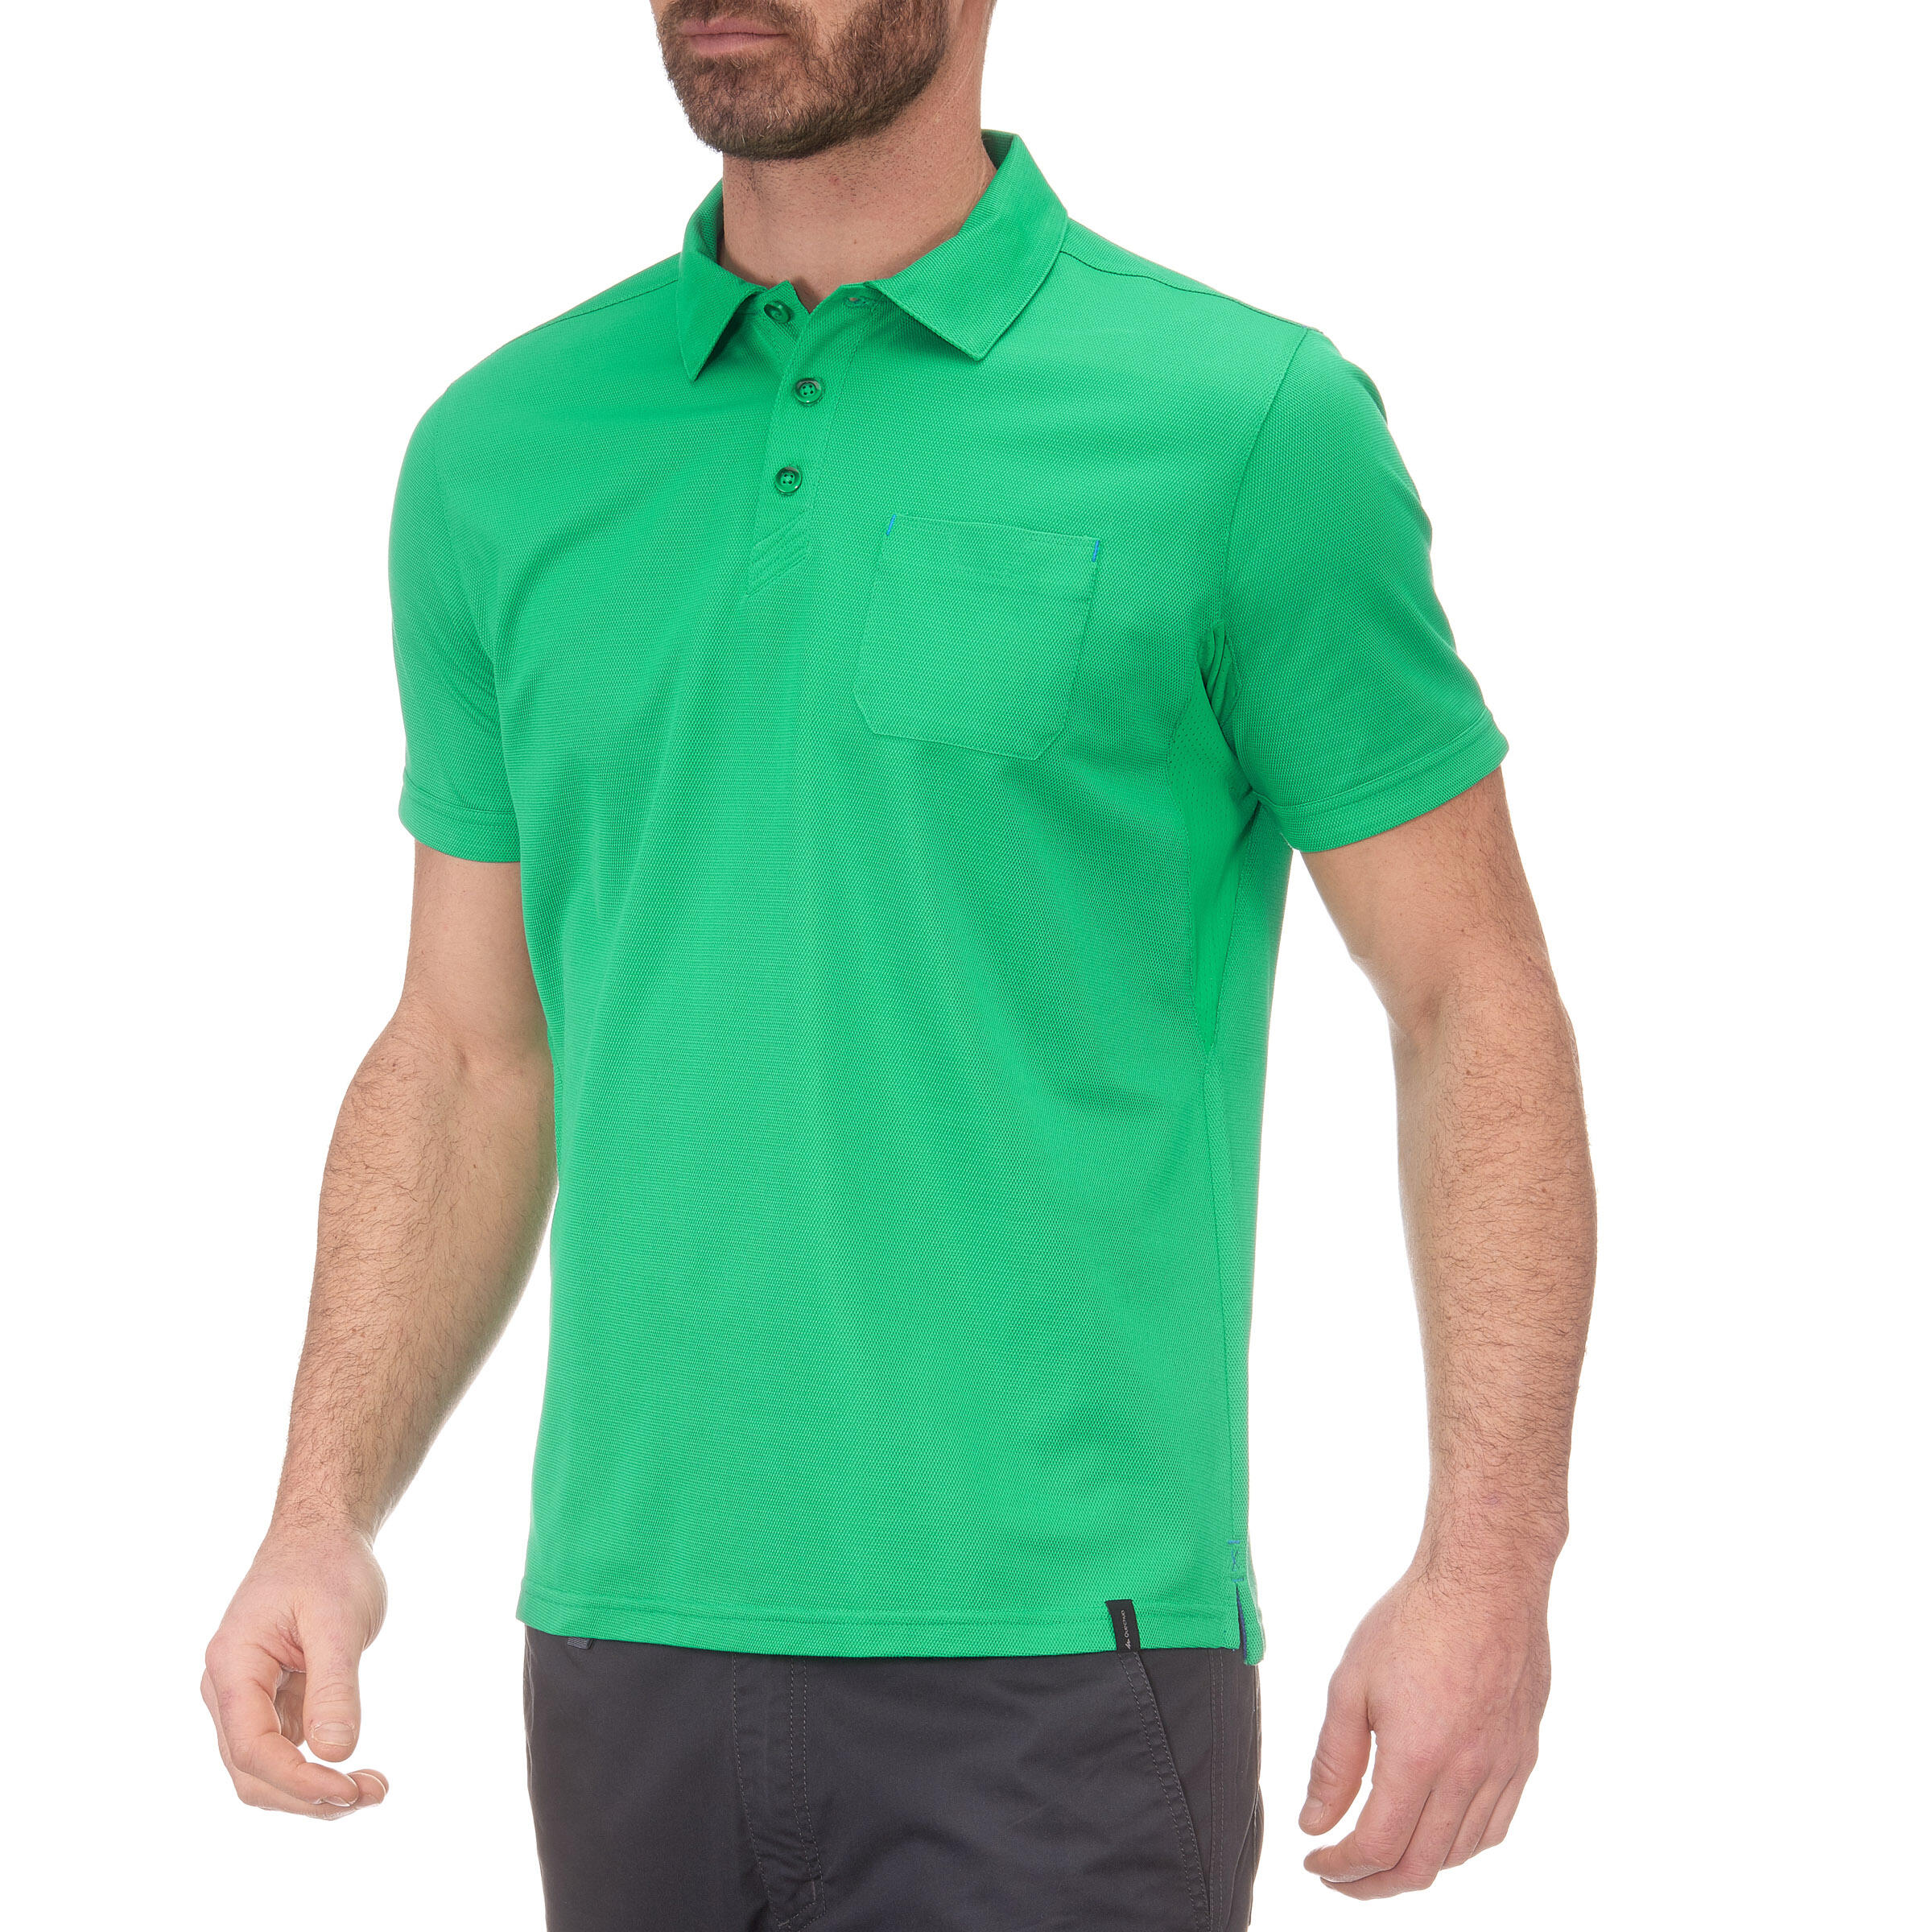 Arpenaz 500 Men's Hiking Polo Shirt - Green 2/10